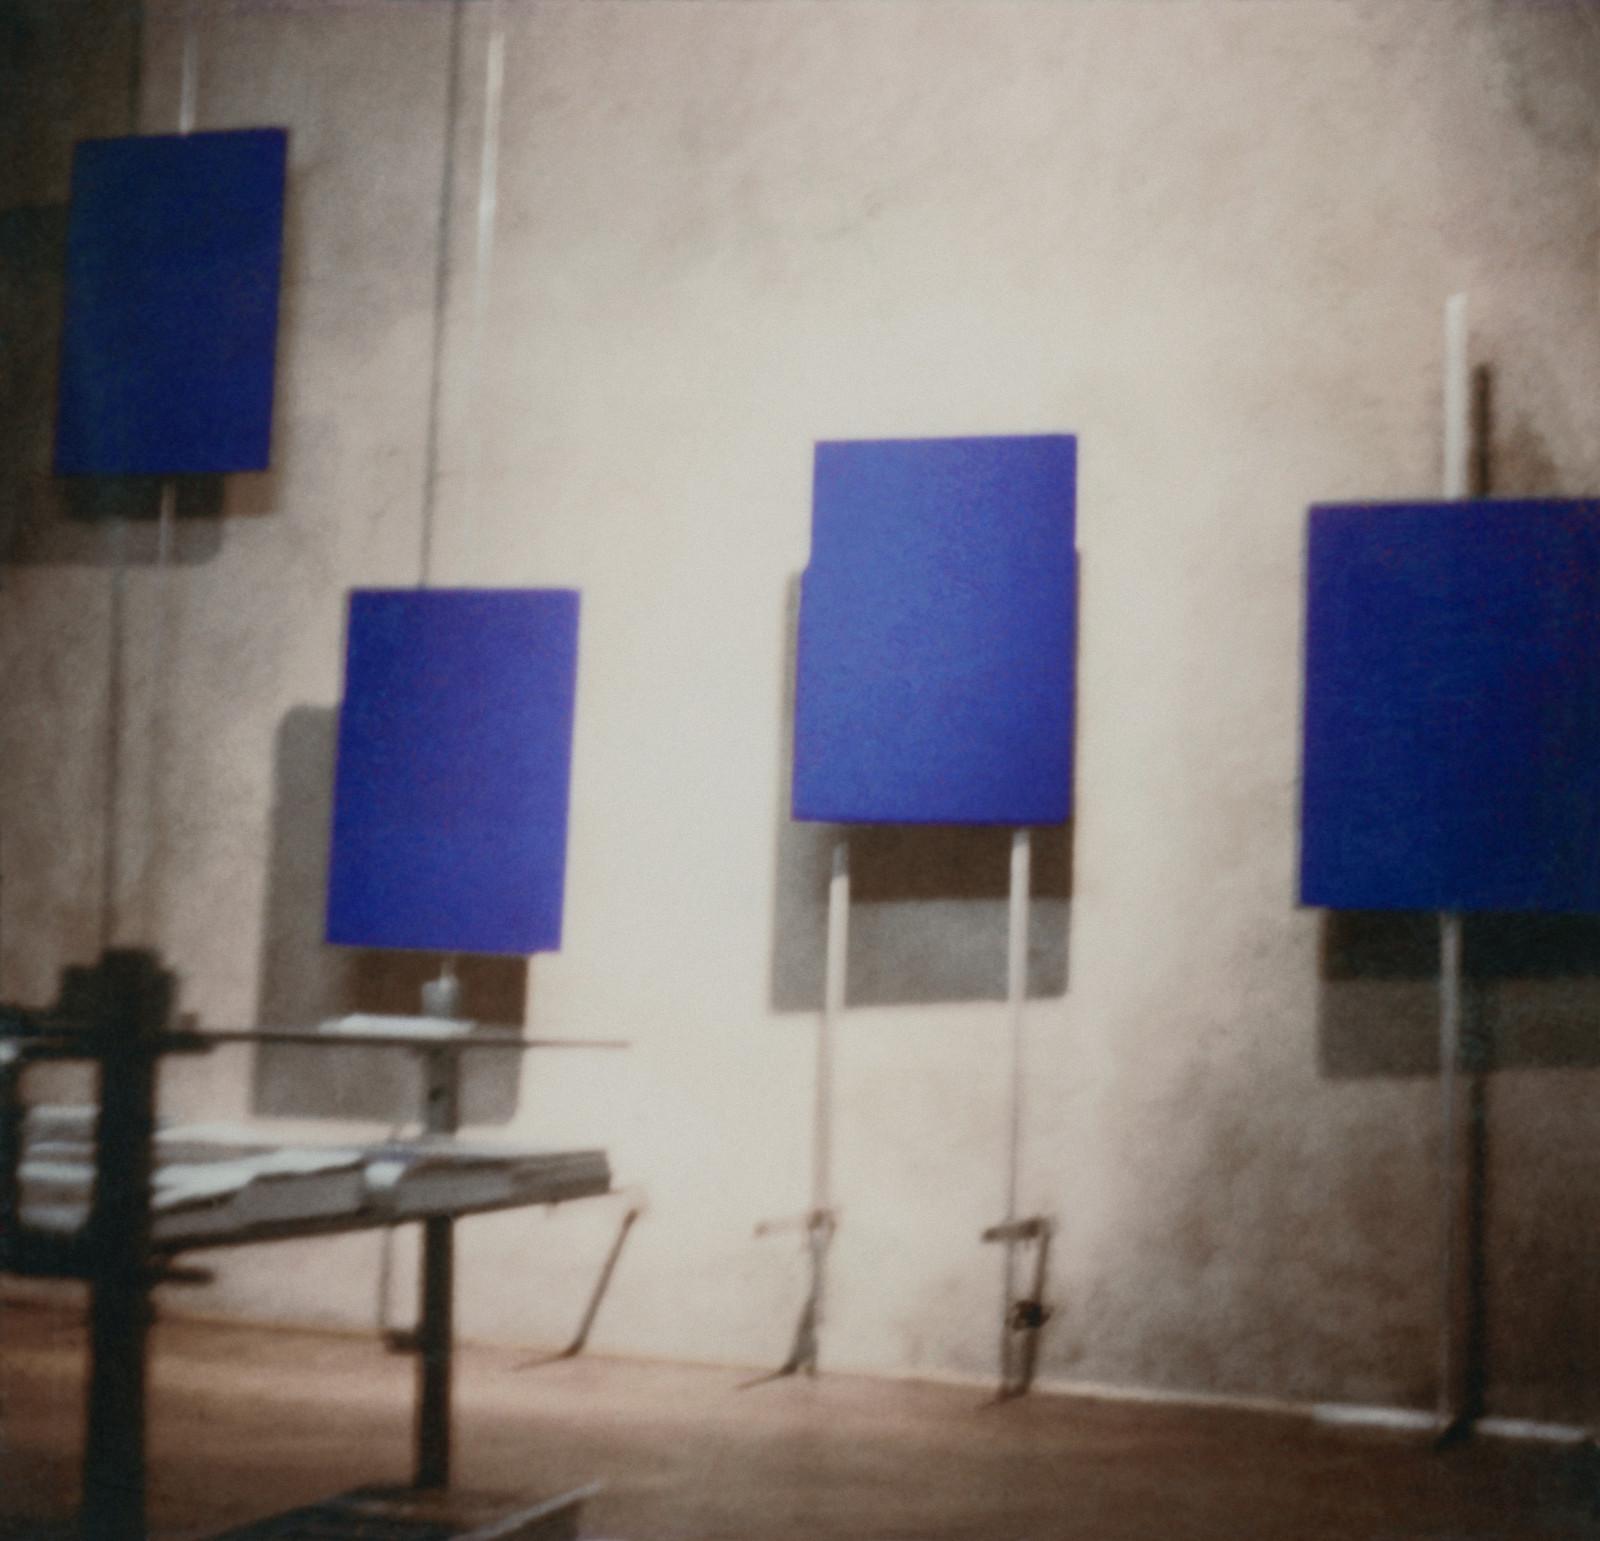 Vue de l'exposition "Yves Klein : Proposte monocrome, epoca blu", Galleria Apollinaire